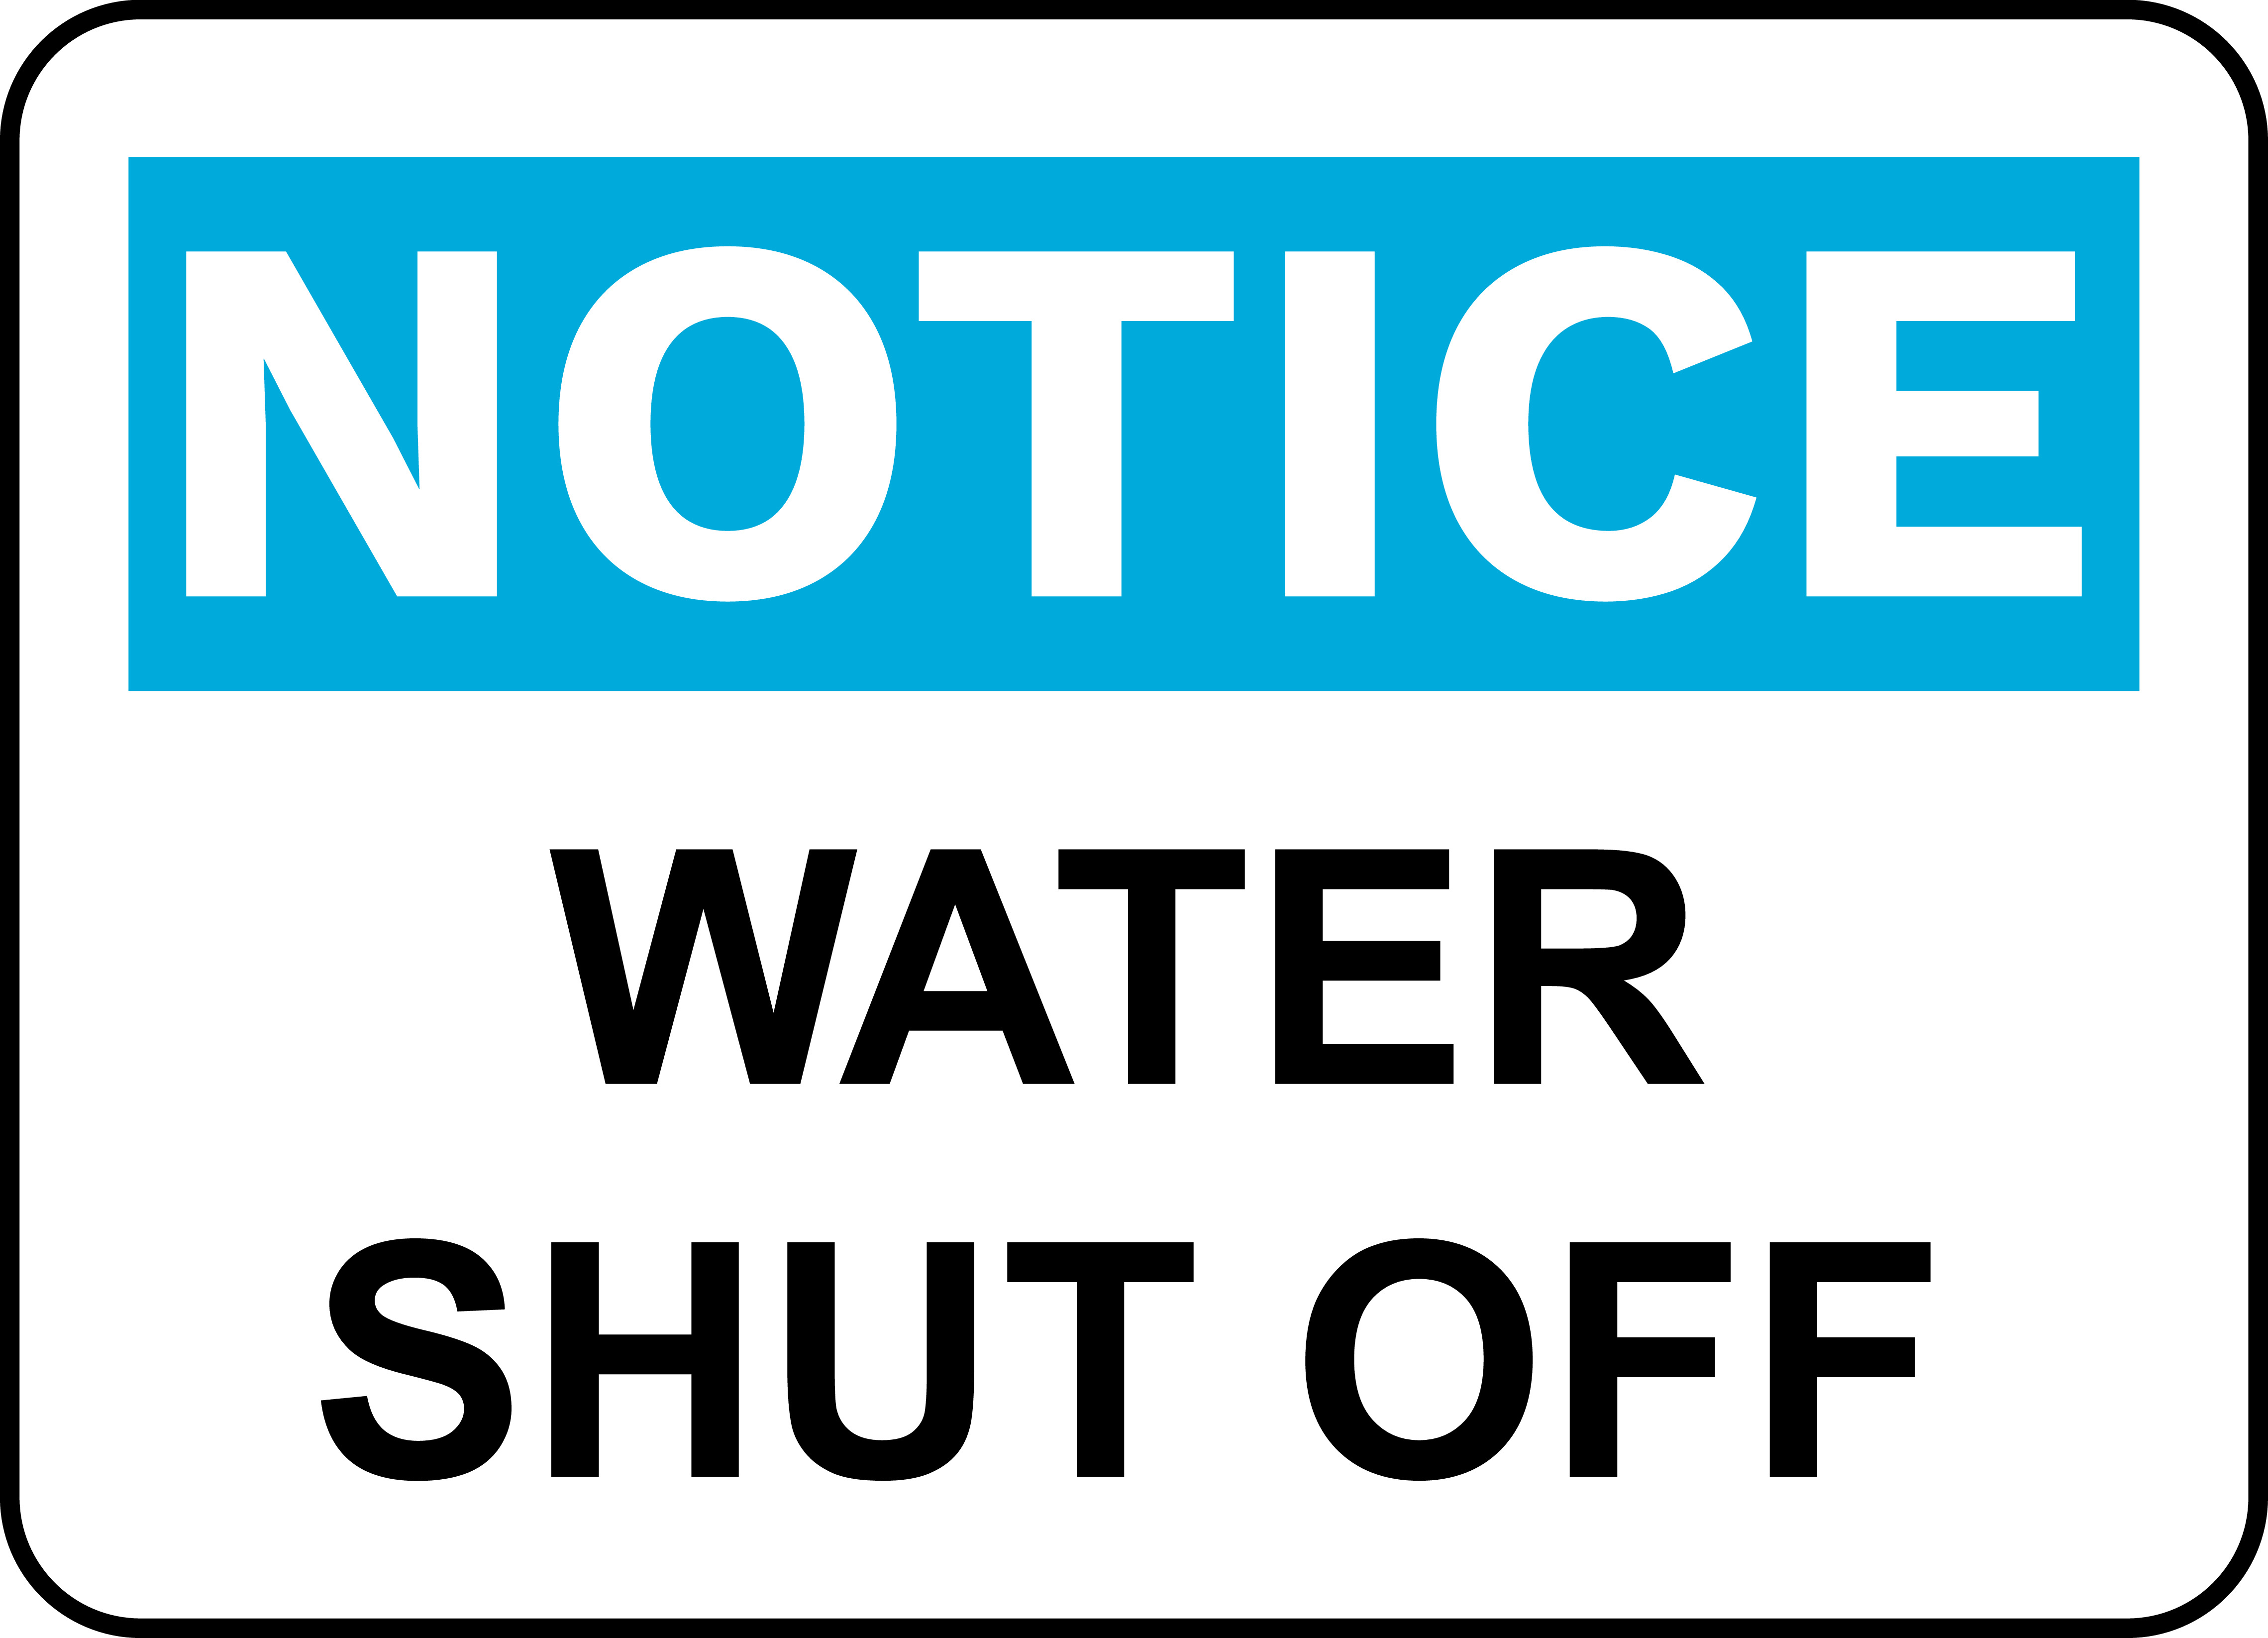 Water Shut Off